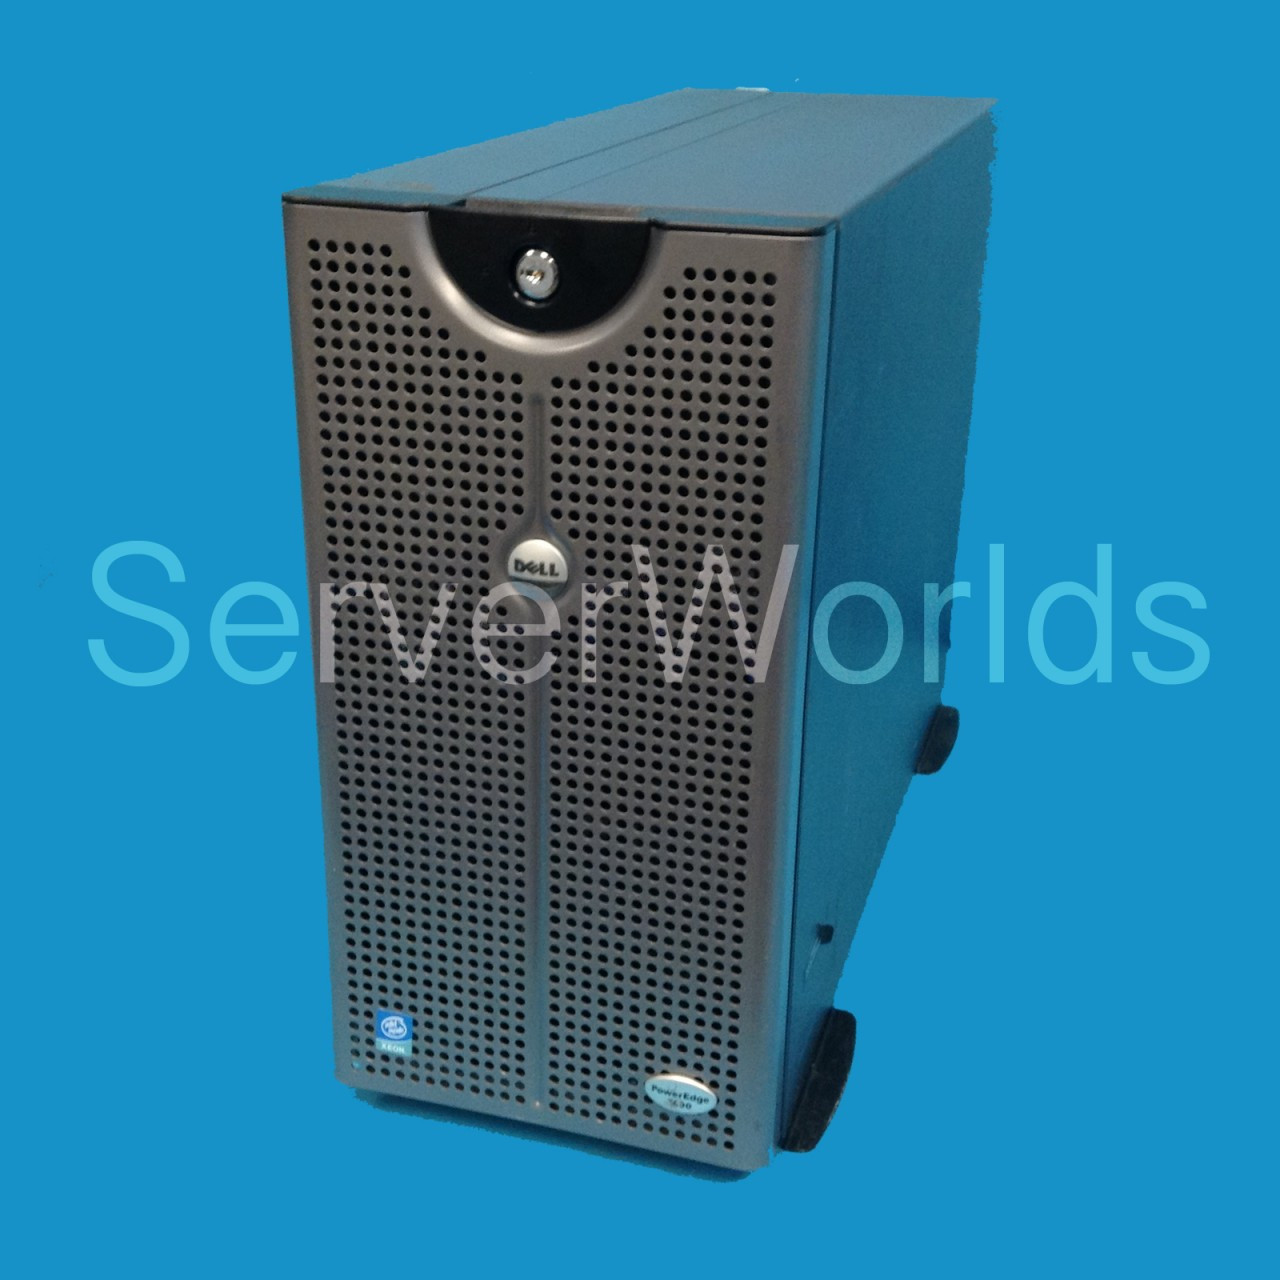 Refurbished Poweredge 2600 Tower Server, 2 x 2.8Ghz, 4GB, 2 x 36GB 15K,RPS